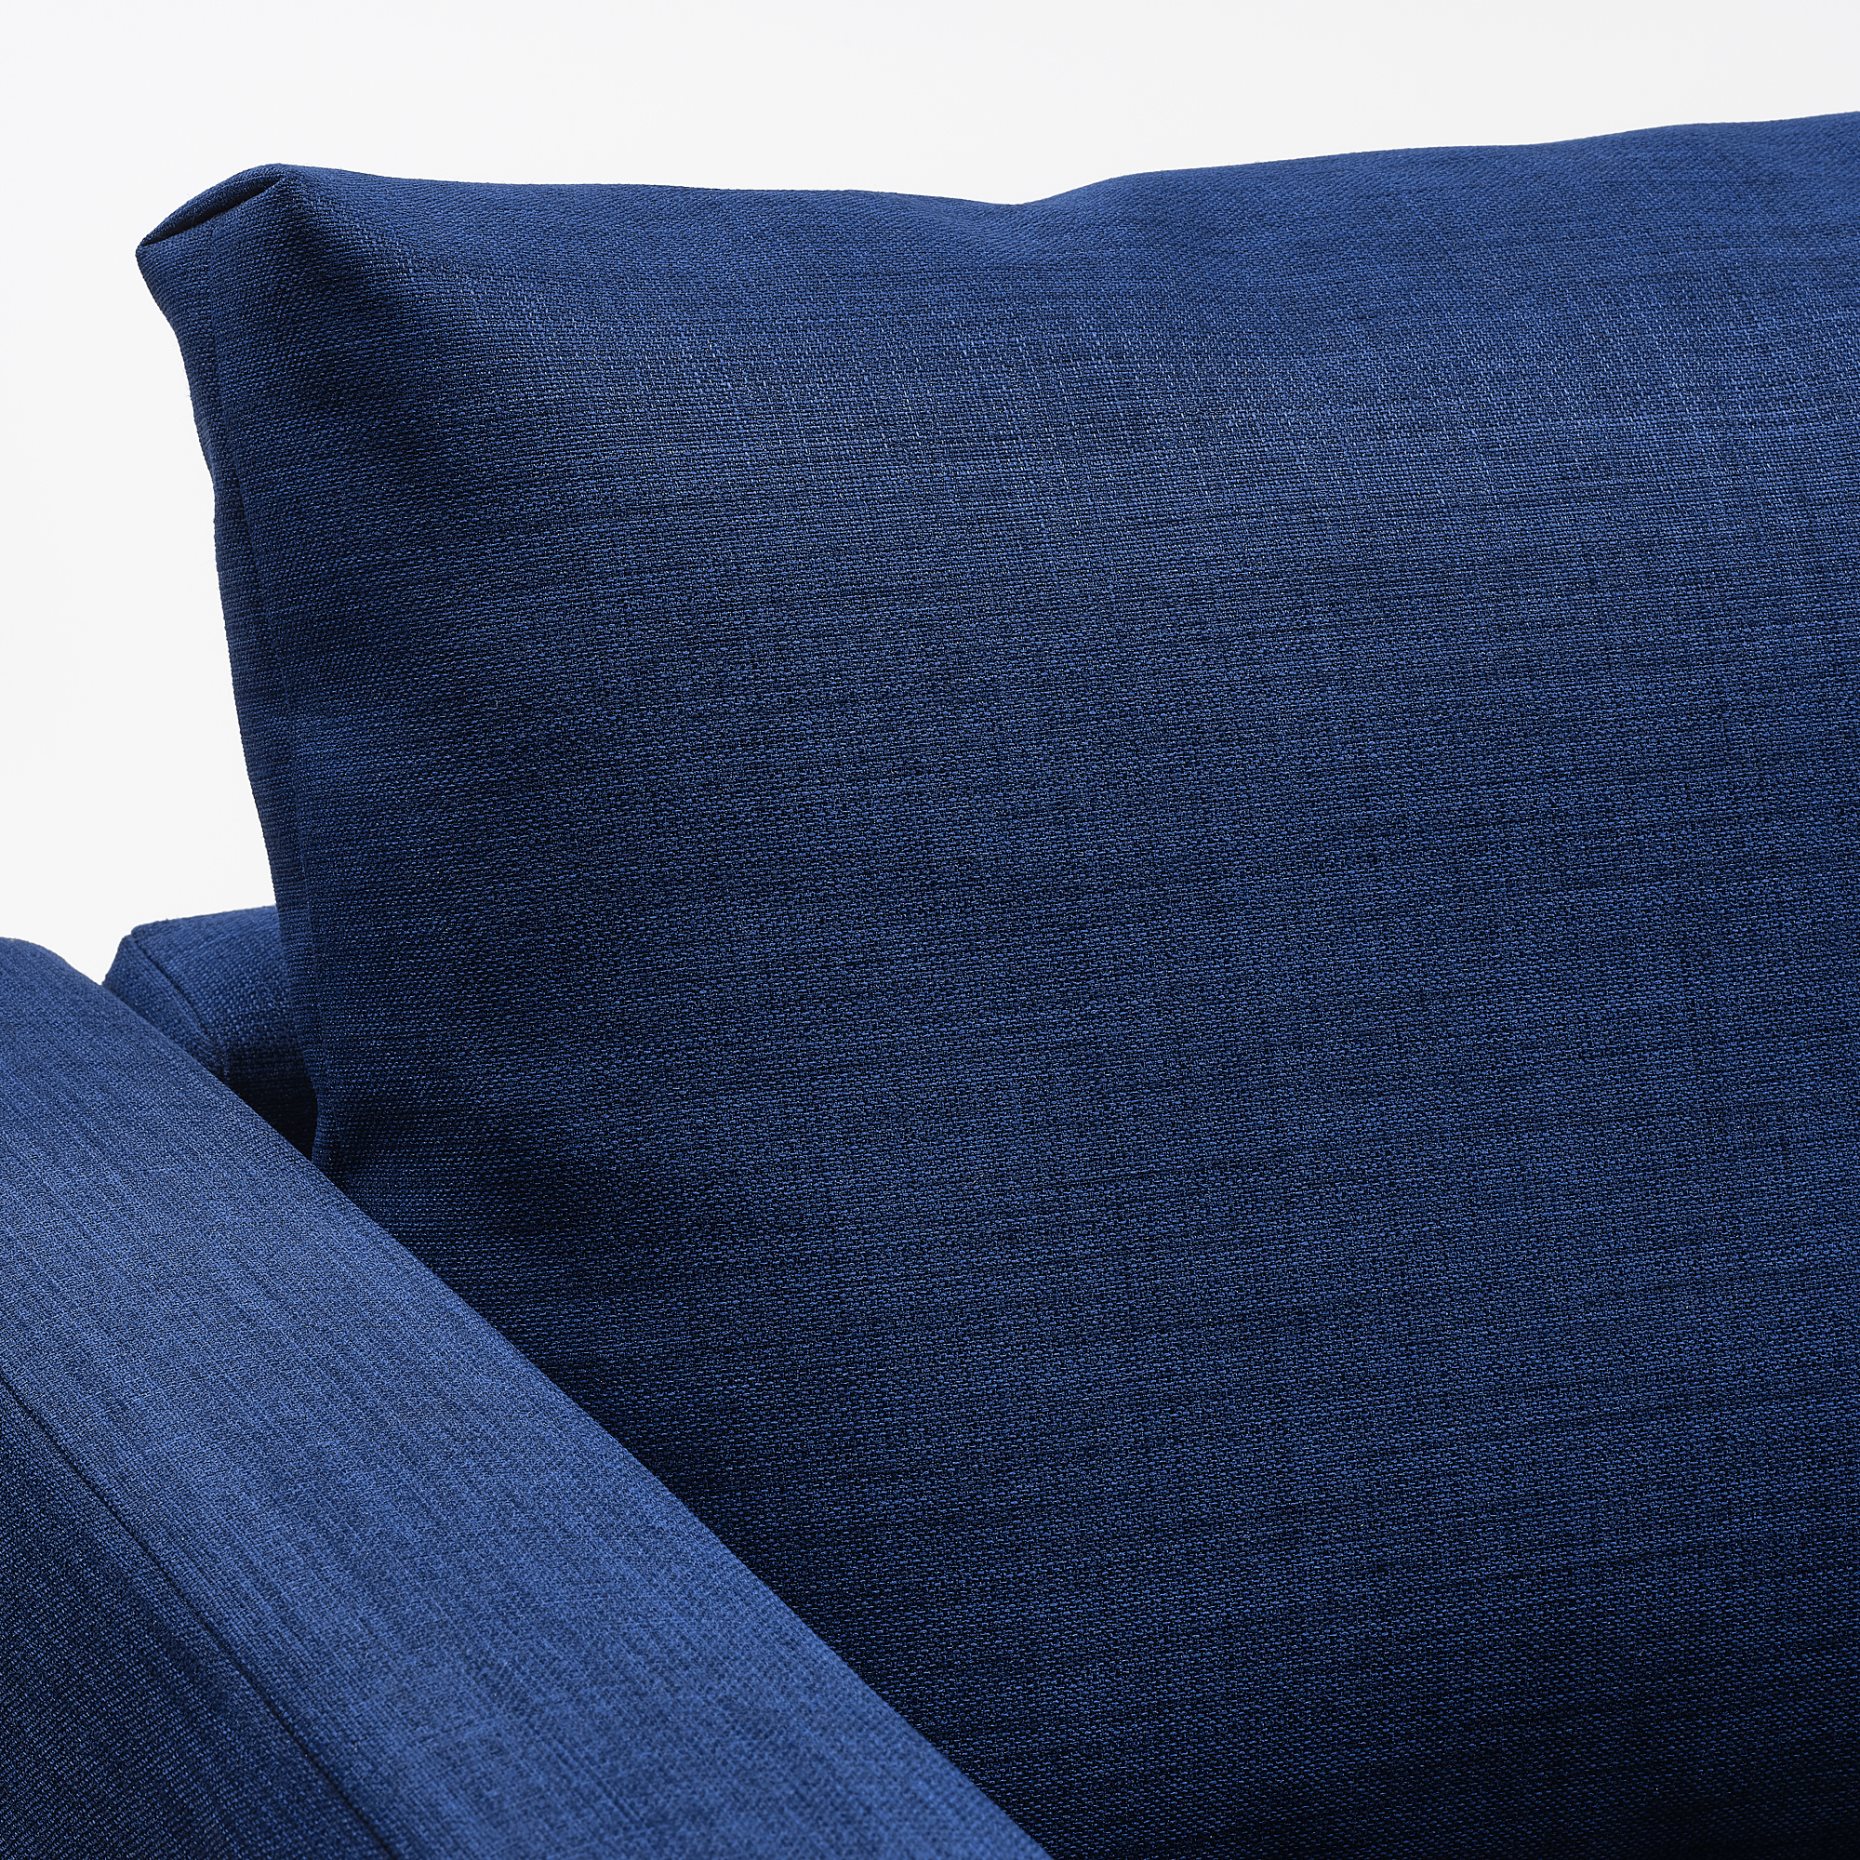 FRIHETEN, γωνιακός καναπές-κρεβάτι με αποθήκευση, 492.975.61